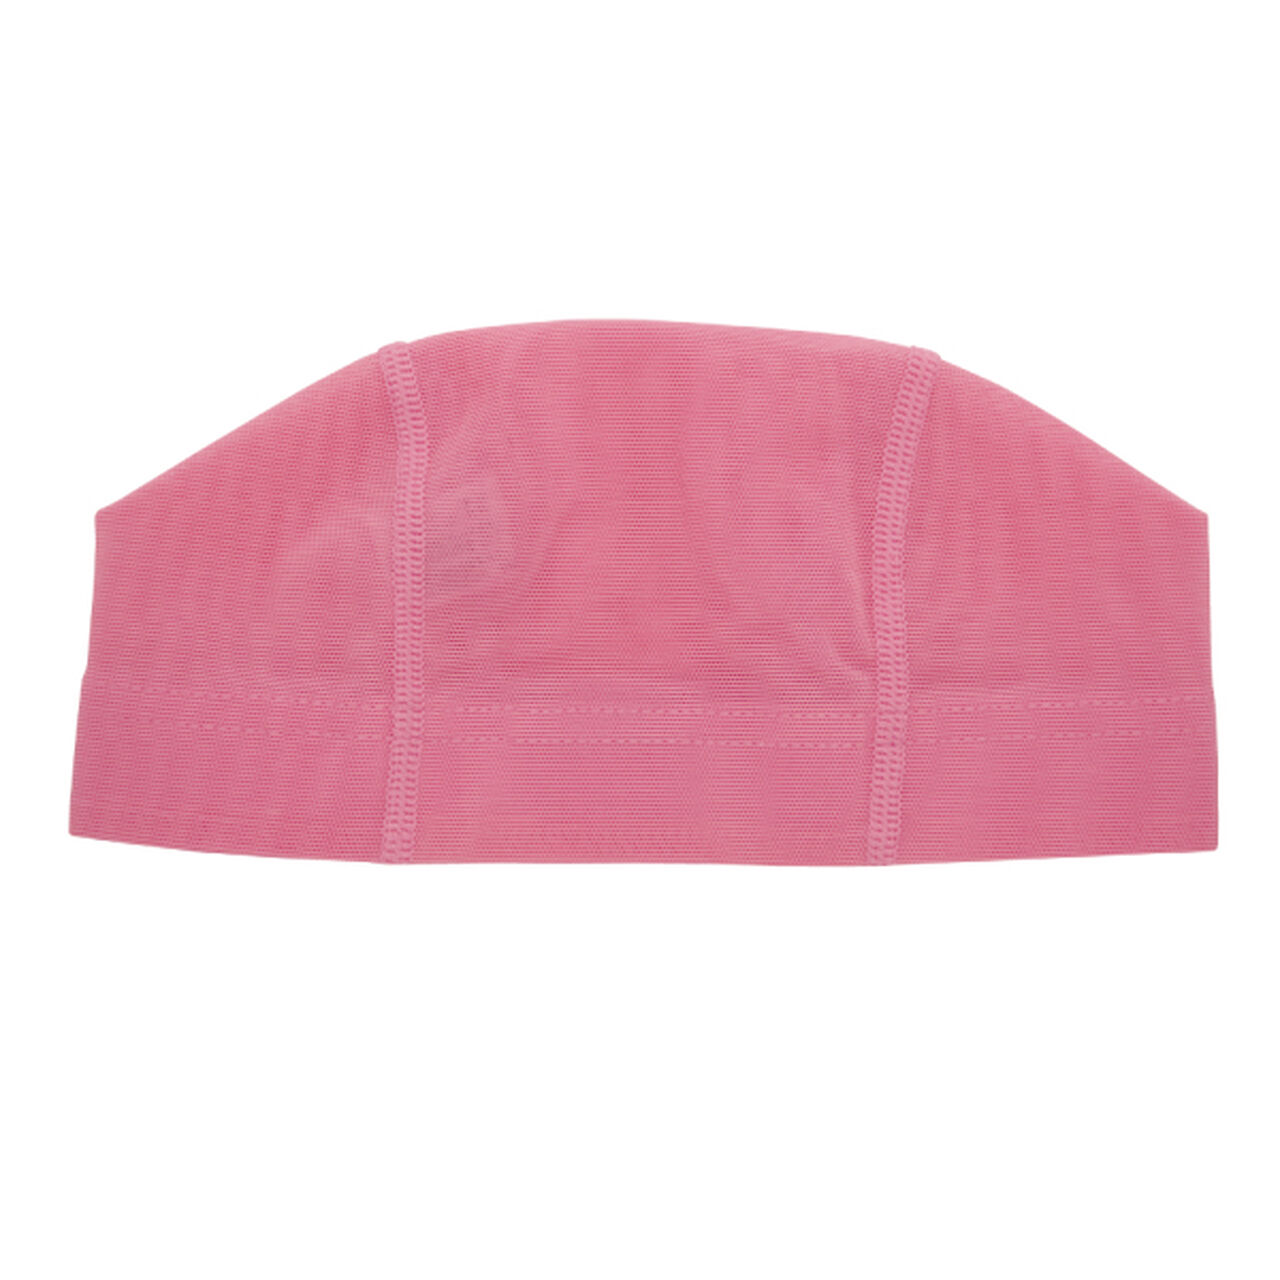 SA-61 M Pink mesh swim cap M size,Opt3, large image number 0